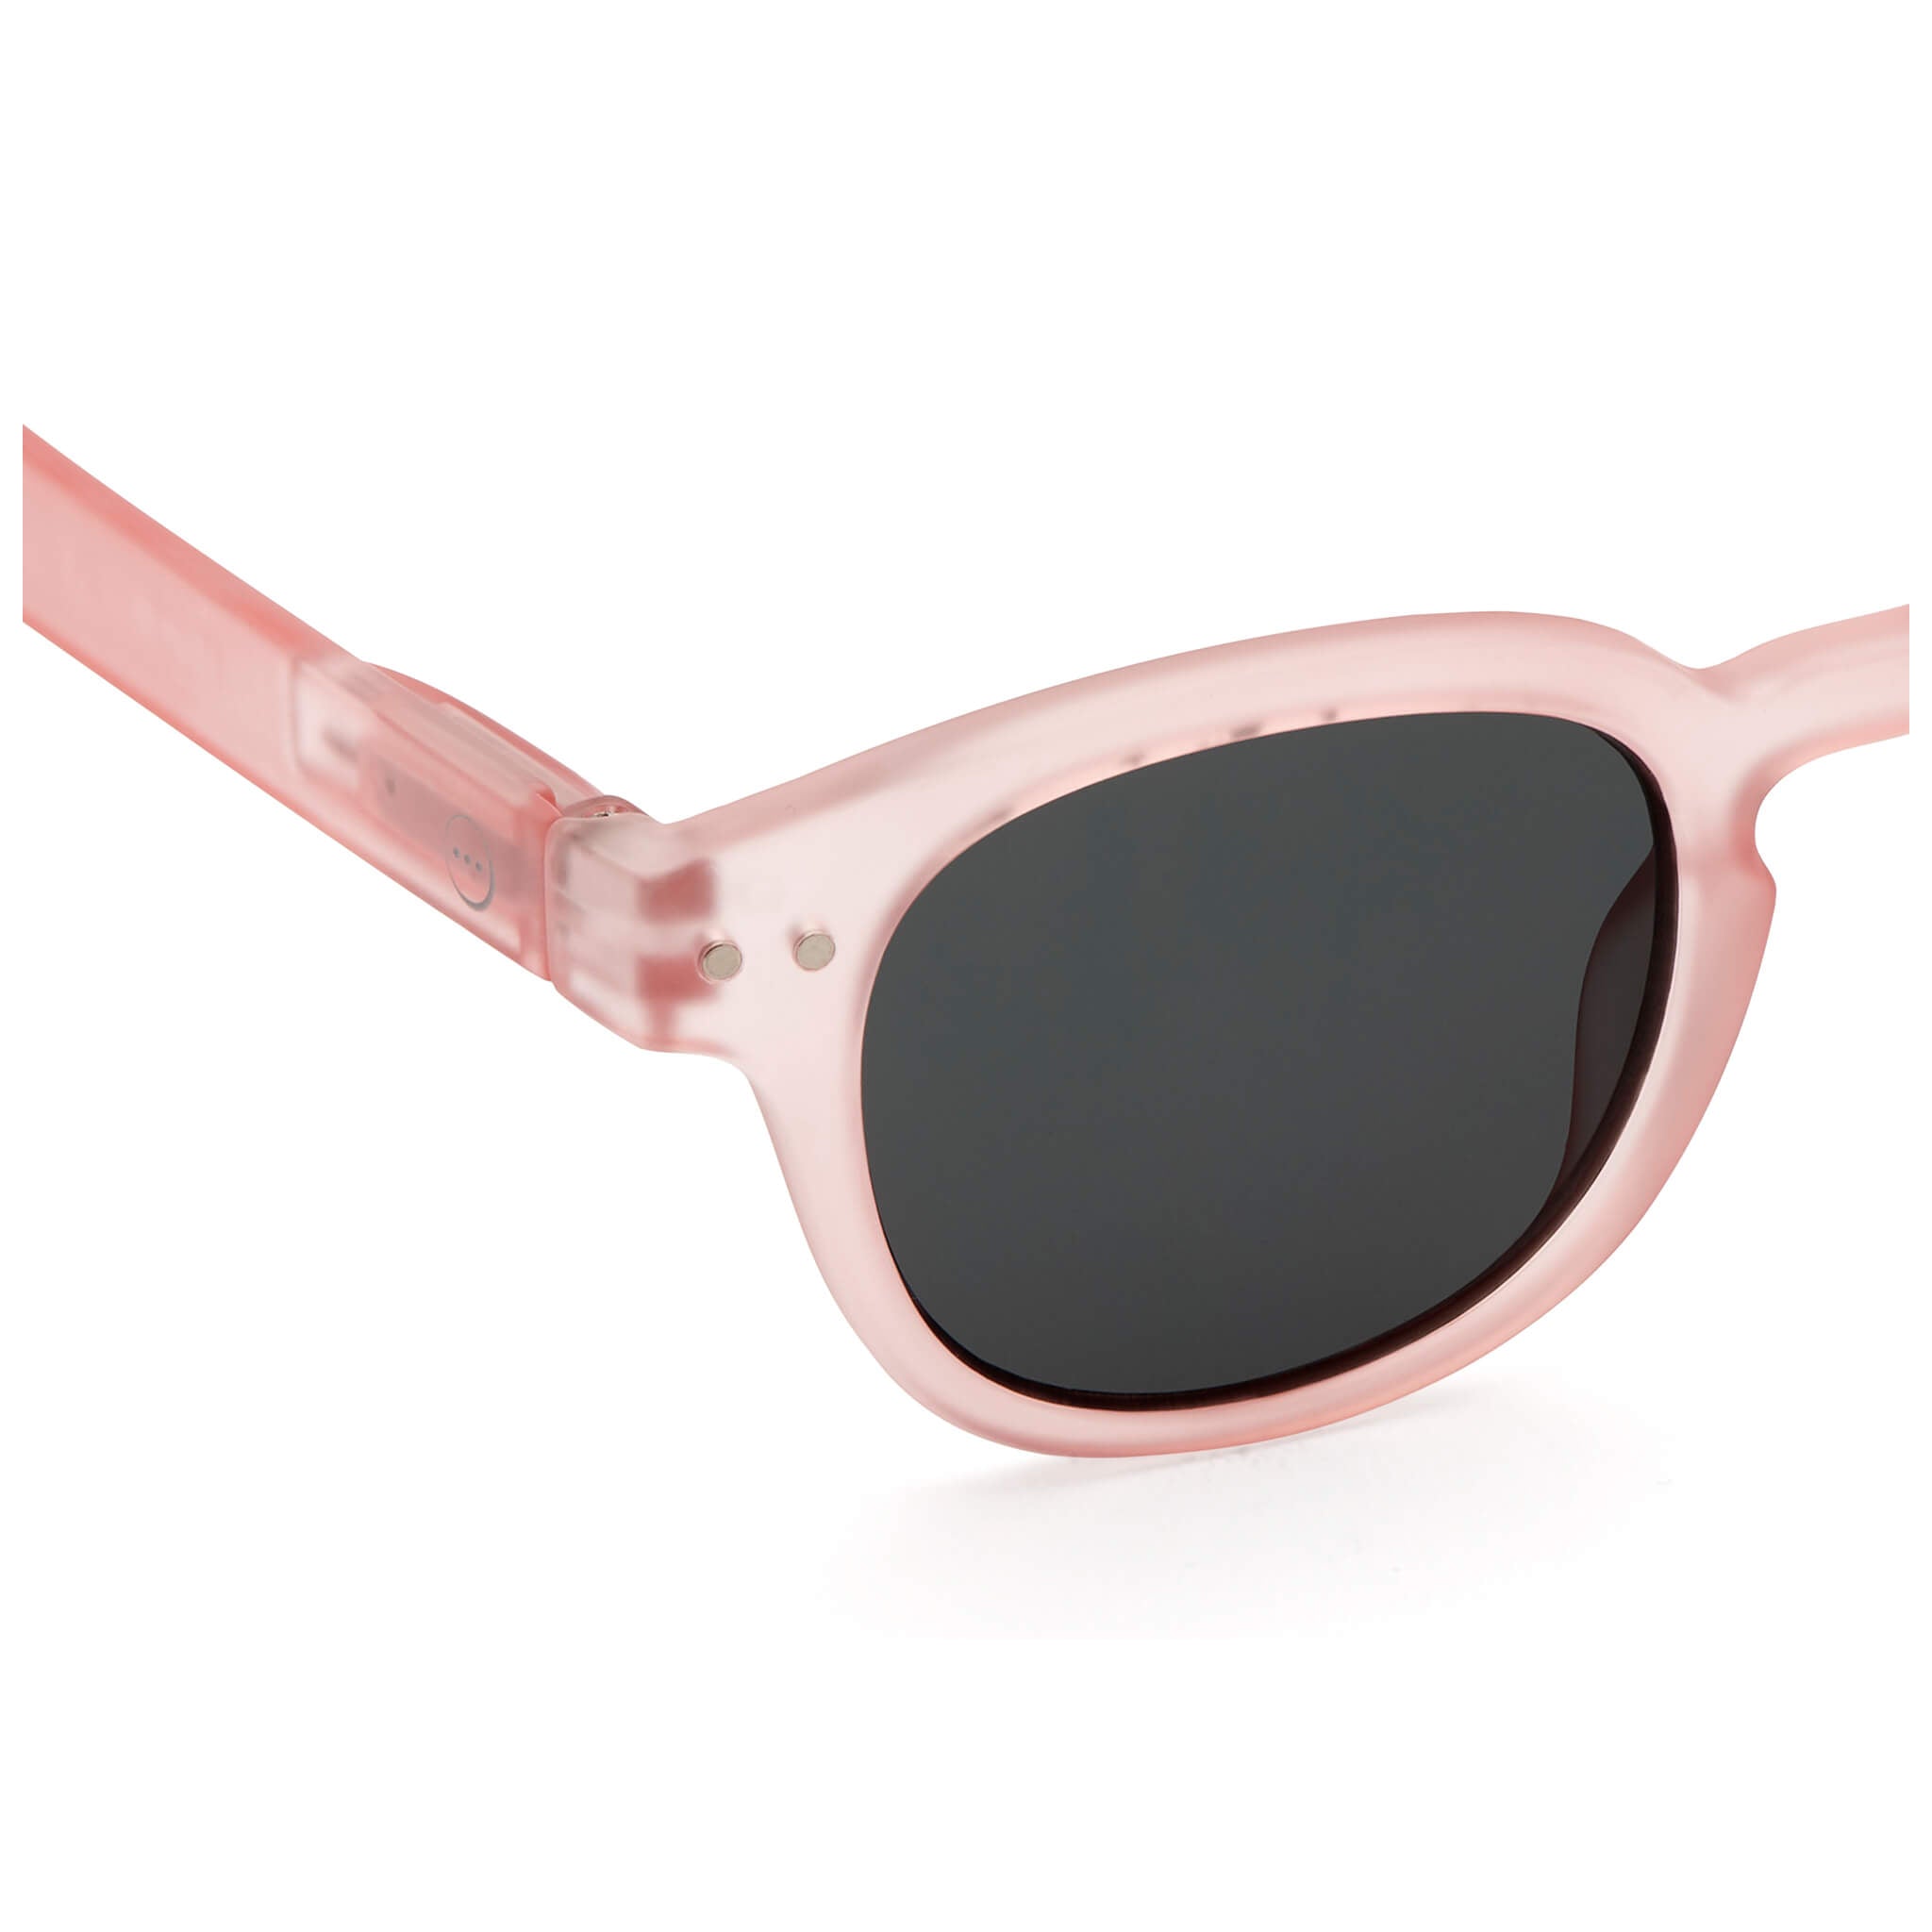 Izipizi Sun Junior (kids age 5-10) Sunglasses Iconic -Pink